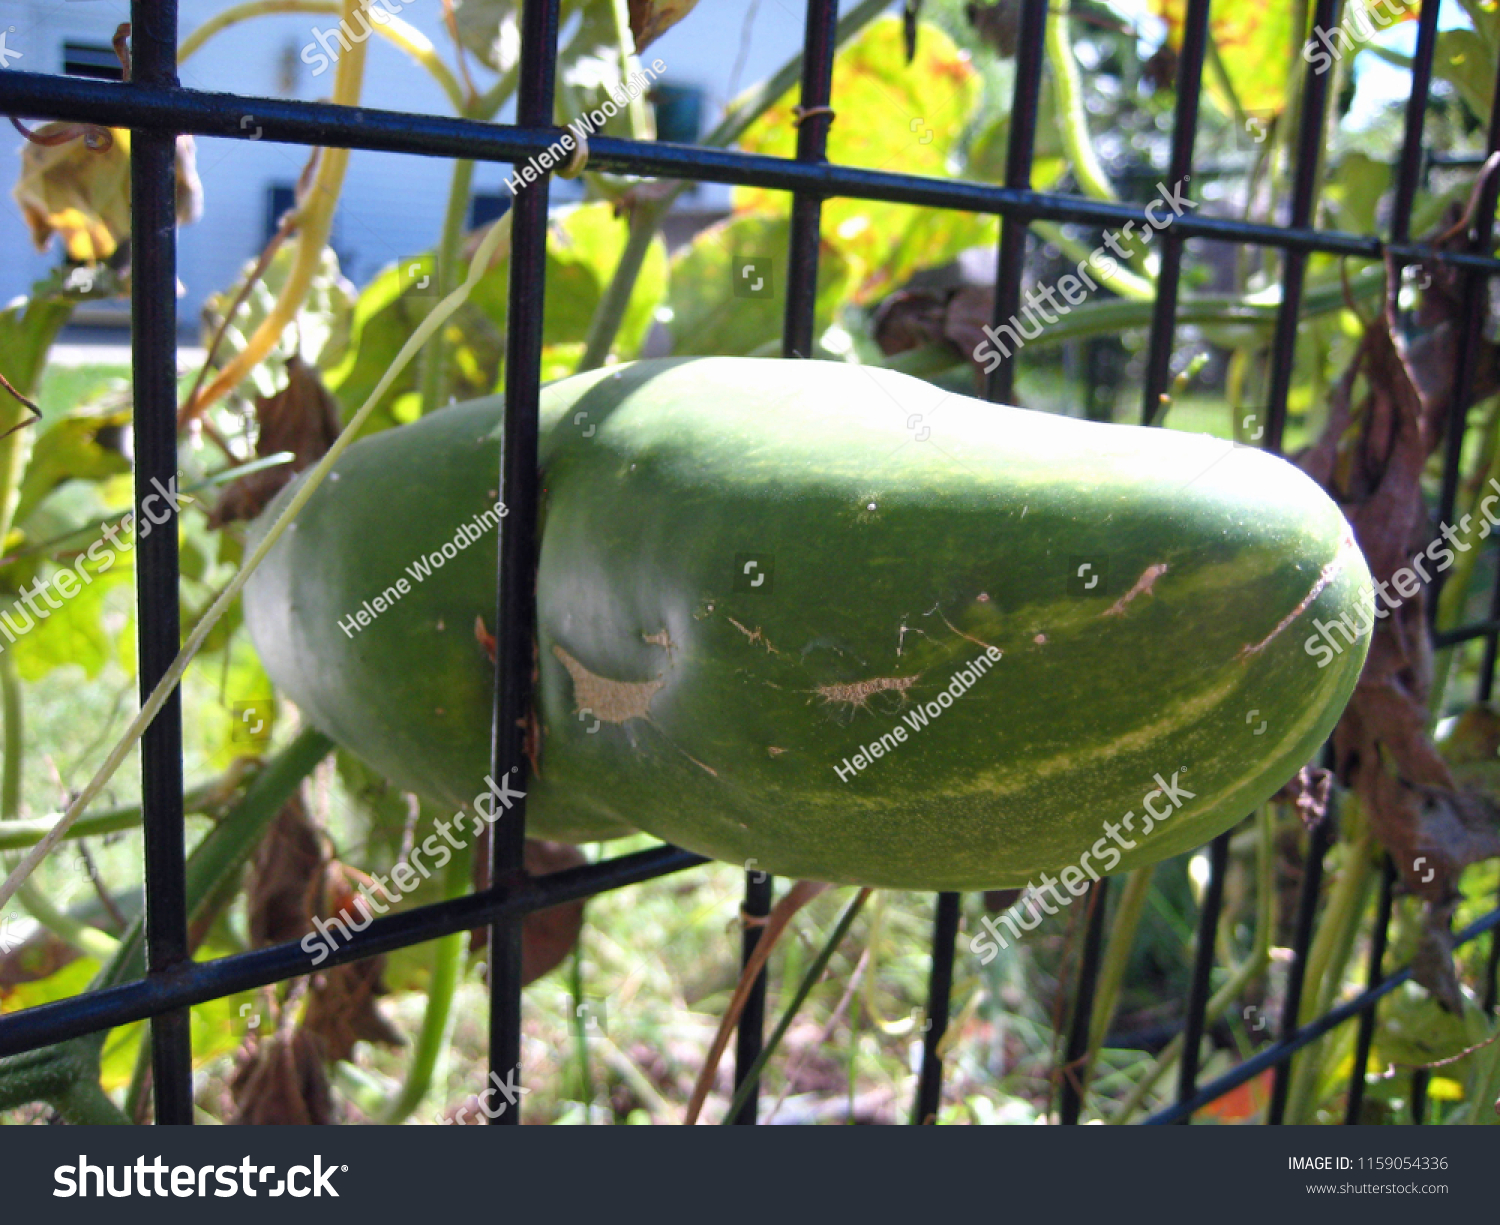 stock-photo-cucumber-pickle-growing-through-garden-fence-1159054336.jpg